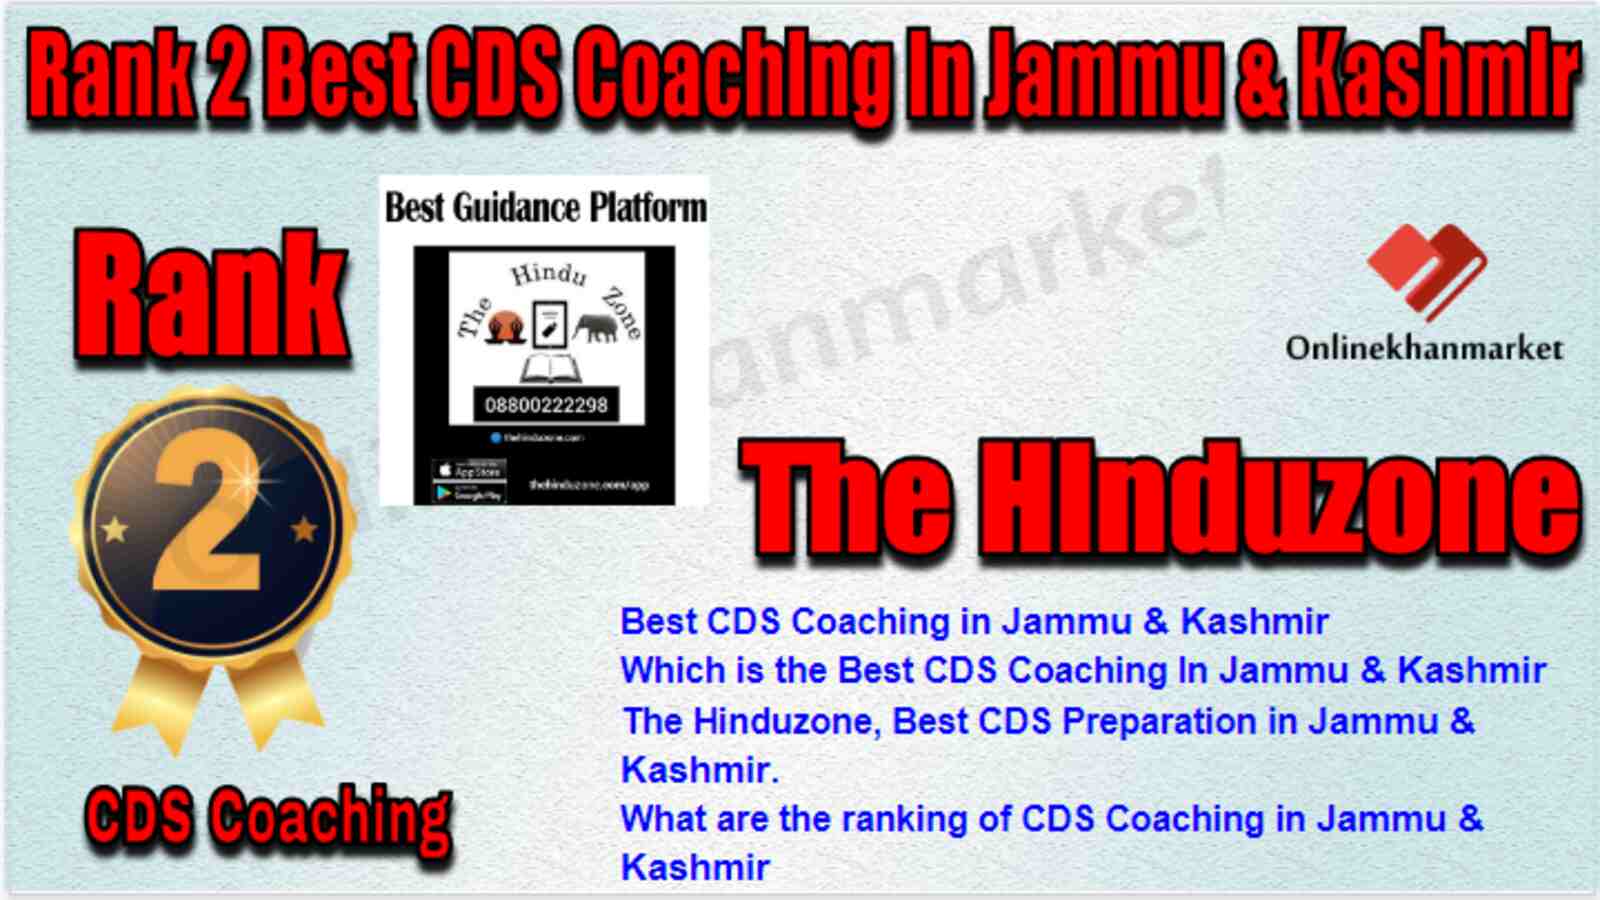 Rank 2 Best CDS Coaching in Jammu & Kashmir